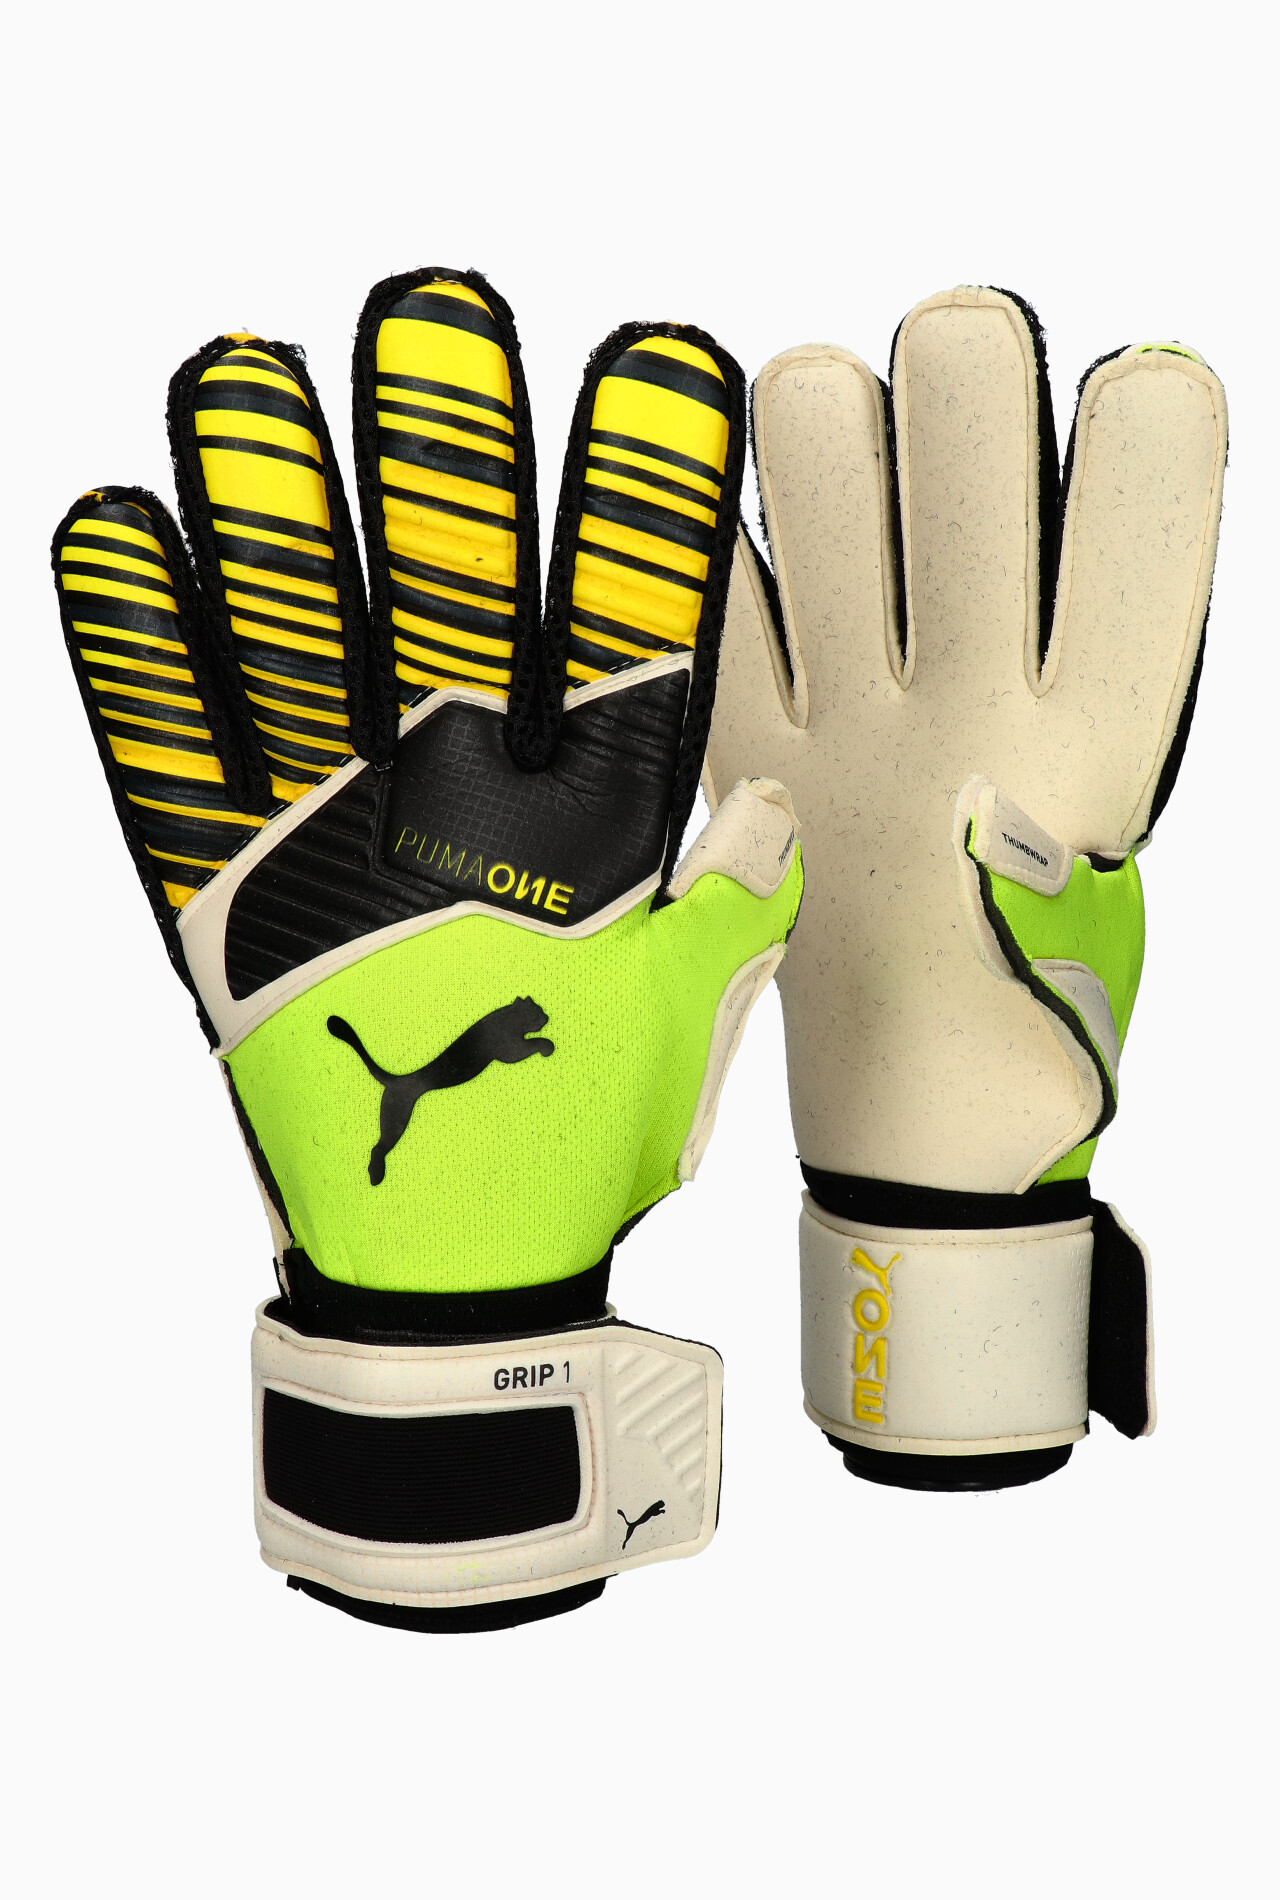 Goalkeeper Gloves One Grip RC | R-GOL.com - boots &